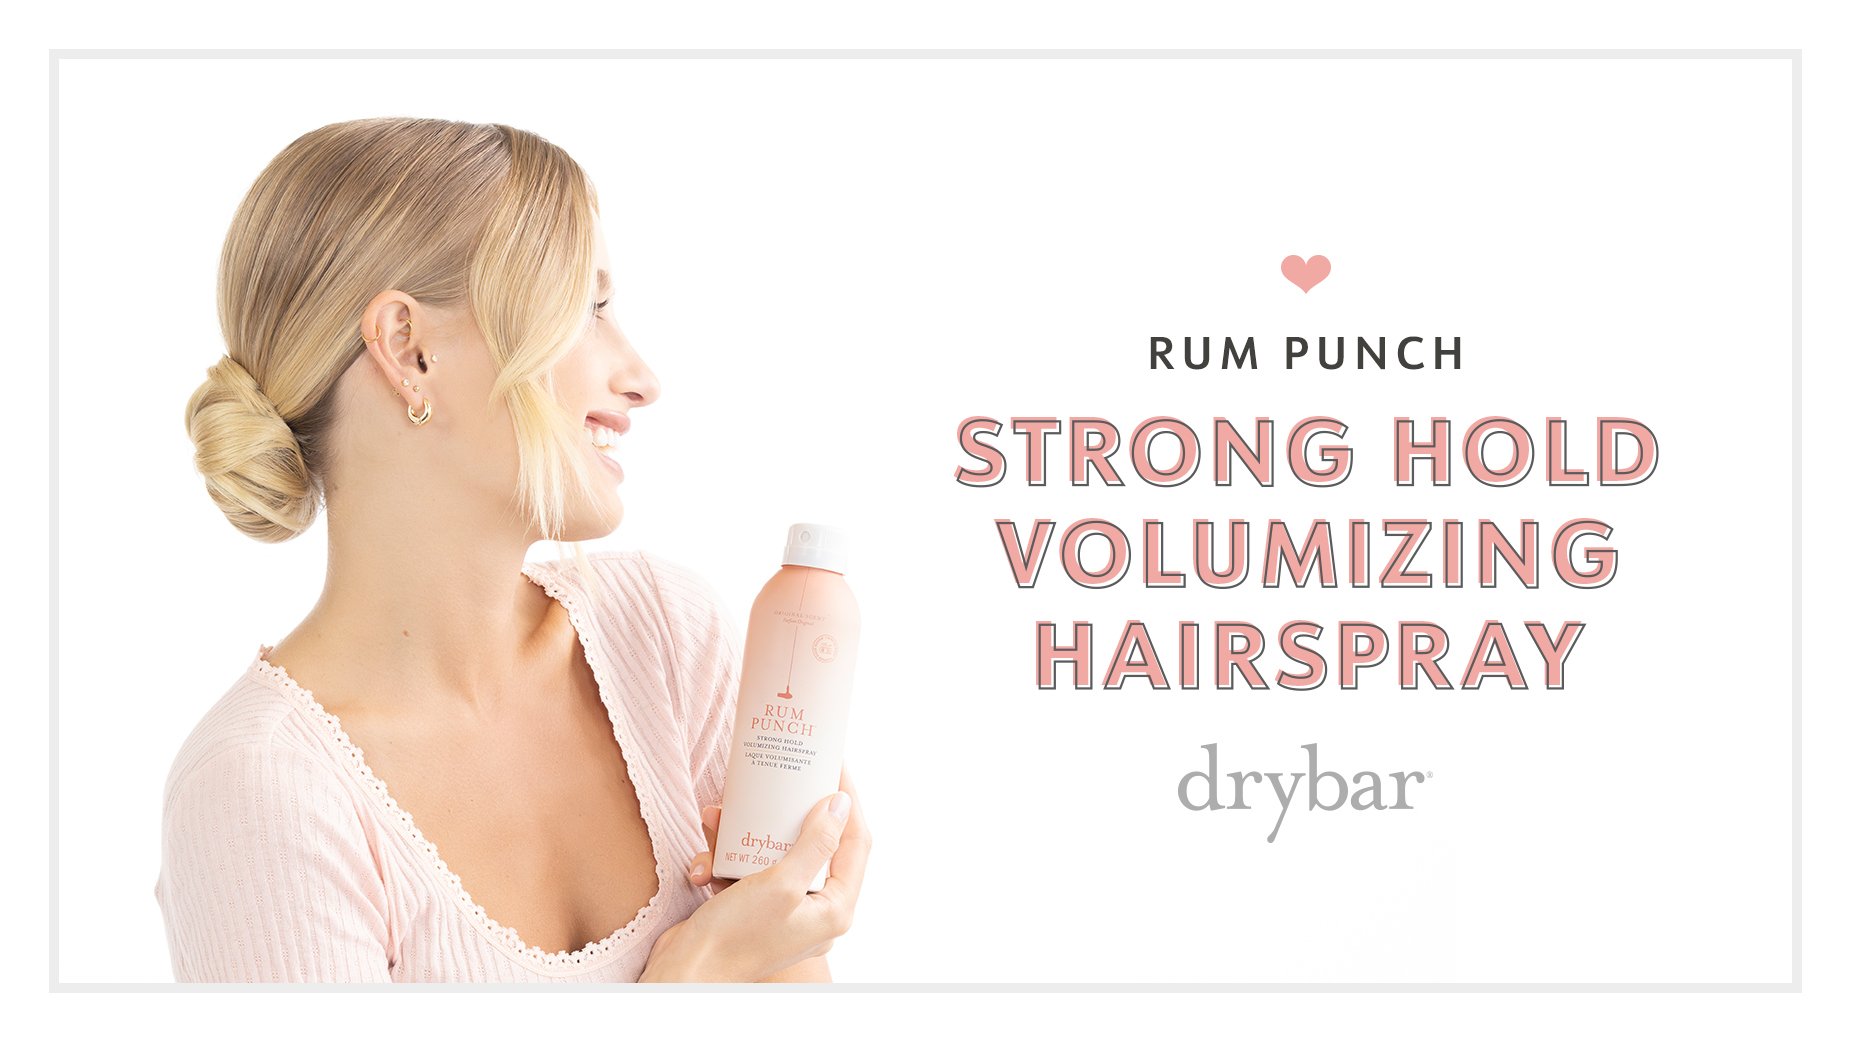 Rum Punch Strong Hold Volumizing Hairspray video